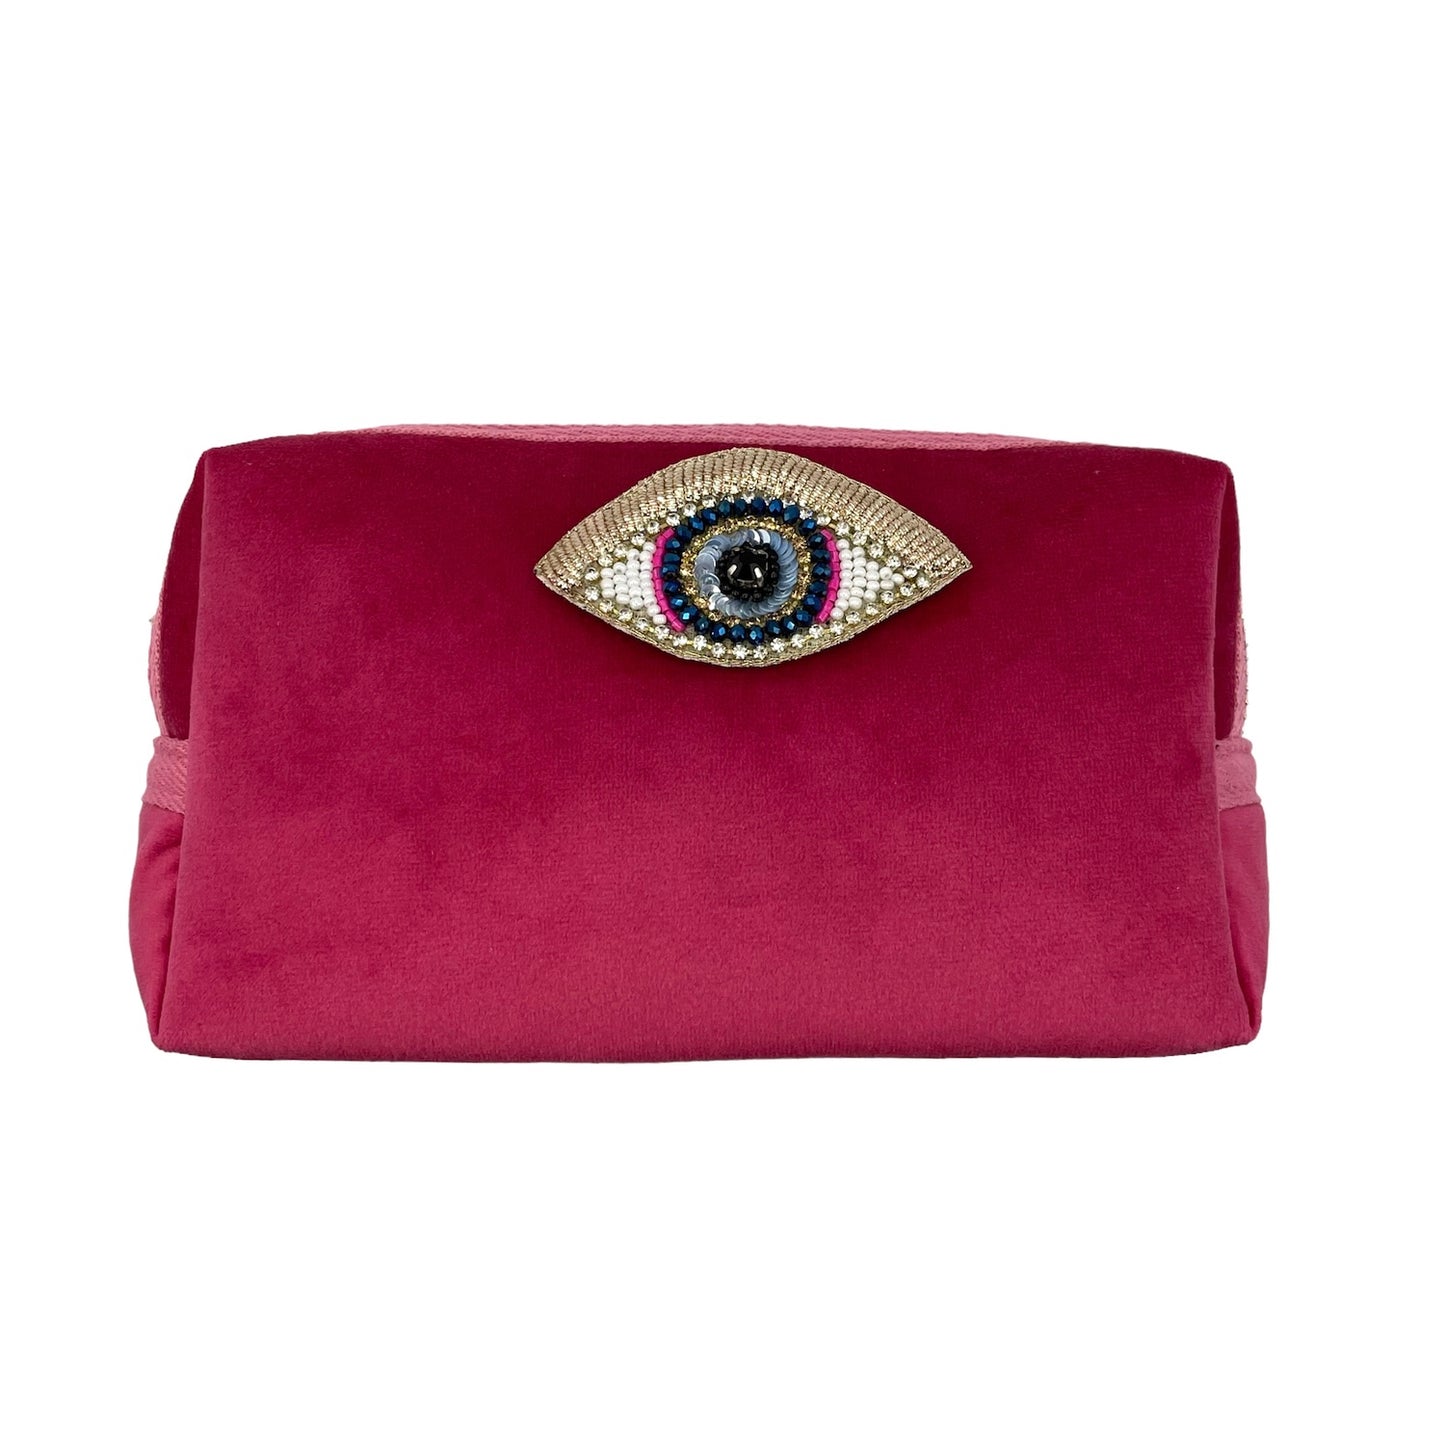 Bright pink make-up bag & golden eyes pin - recycled velvet